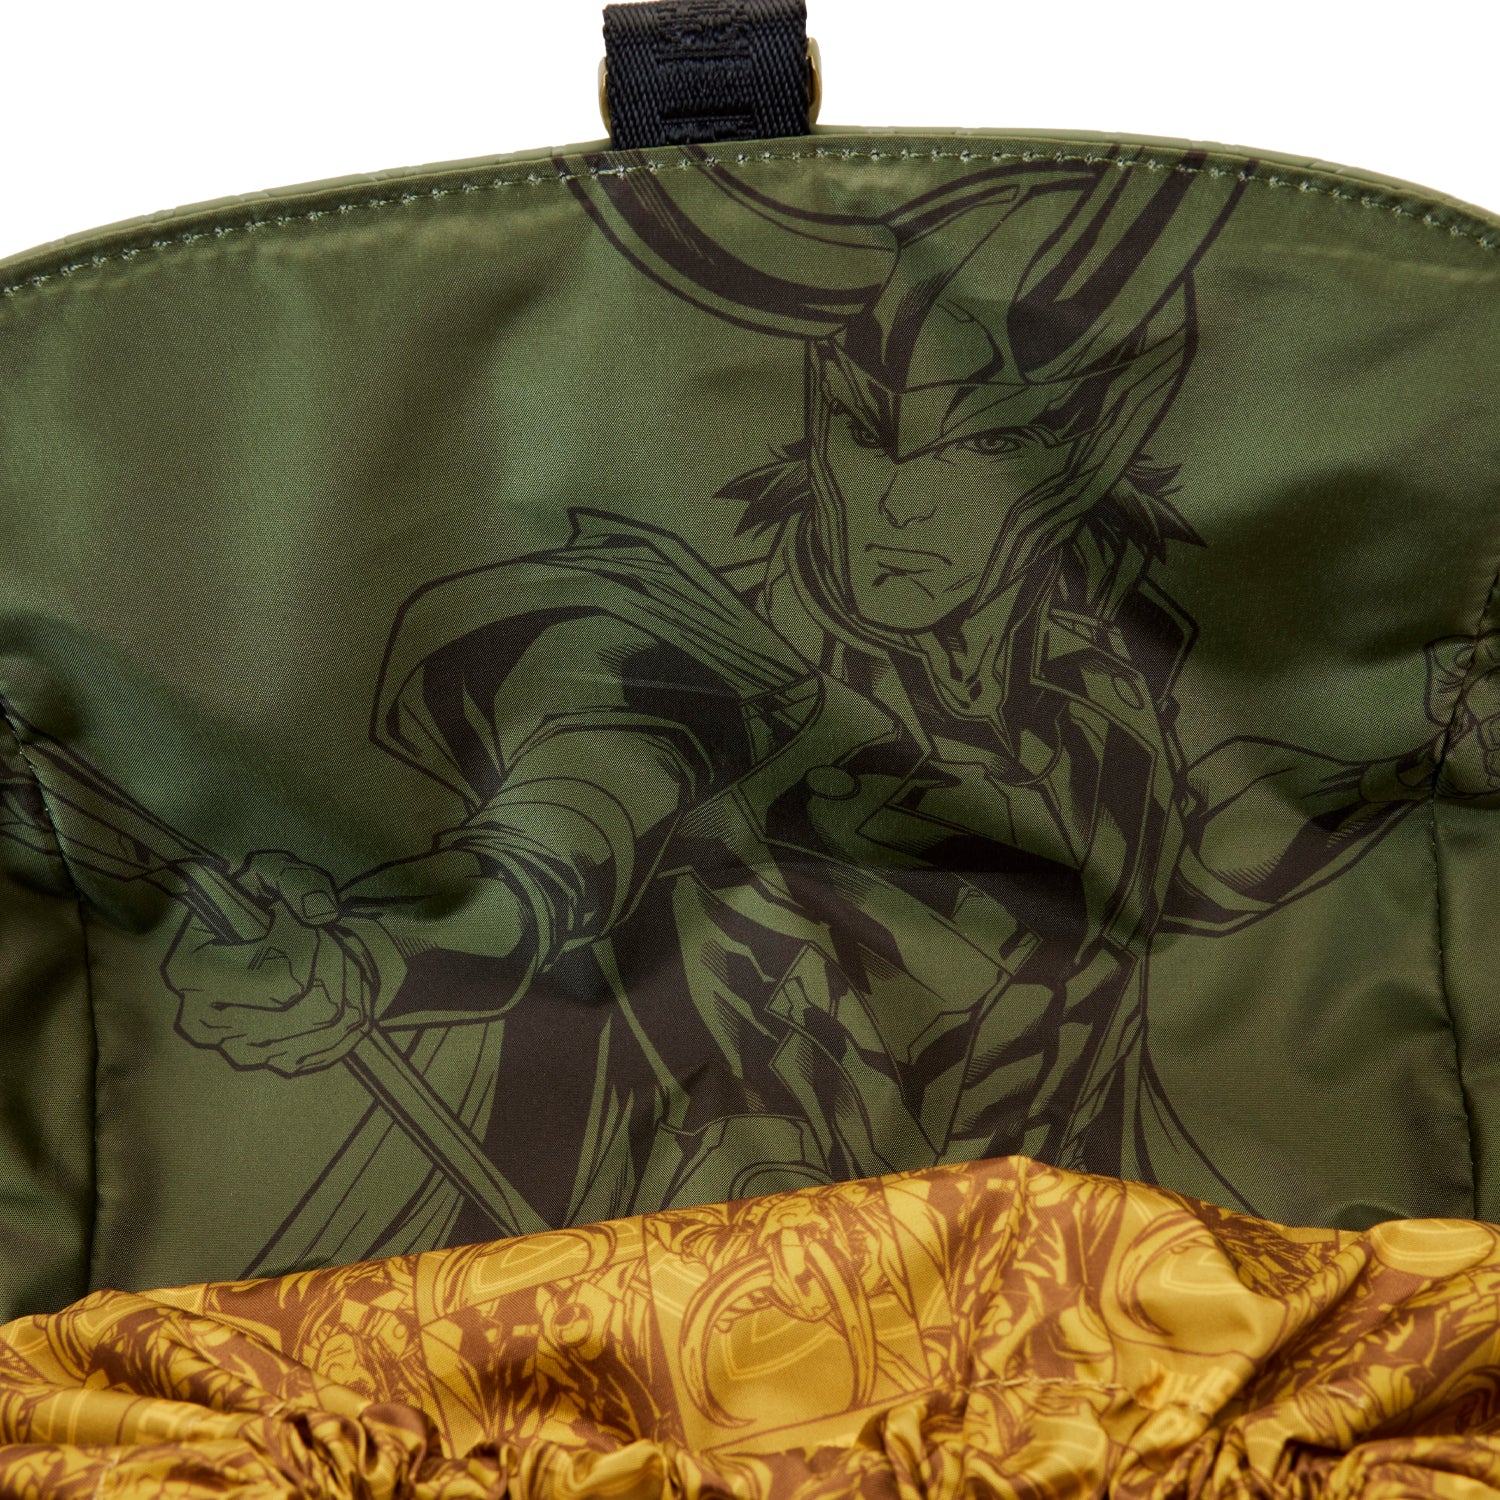 Loungefly Collectiv x Marvel Loki The Travelr Full Sized Backpack